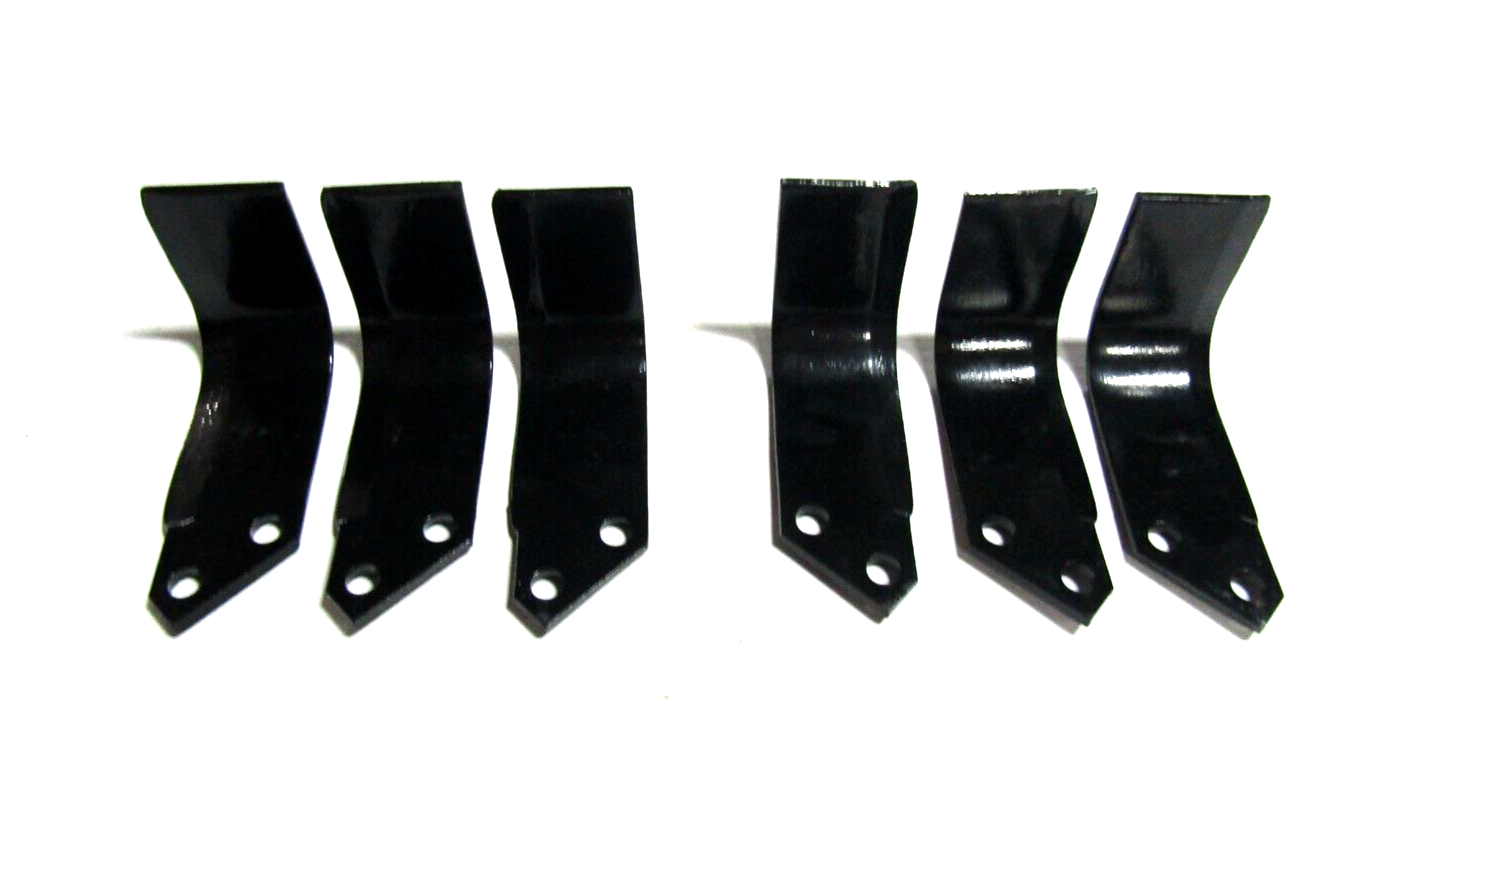 6 tiller tine blades for King Kutter 505002 TG TG-G 3 Left & 3 Right TG series